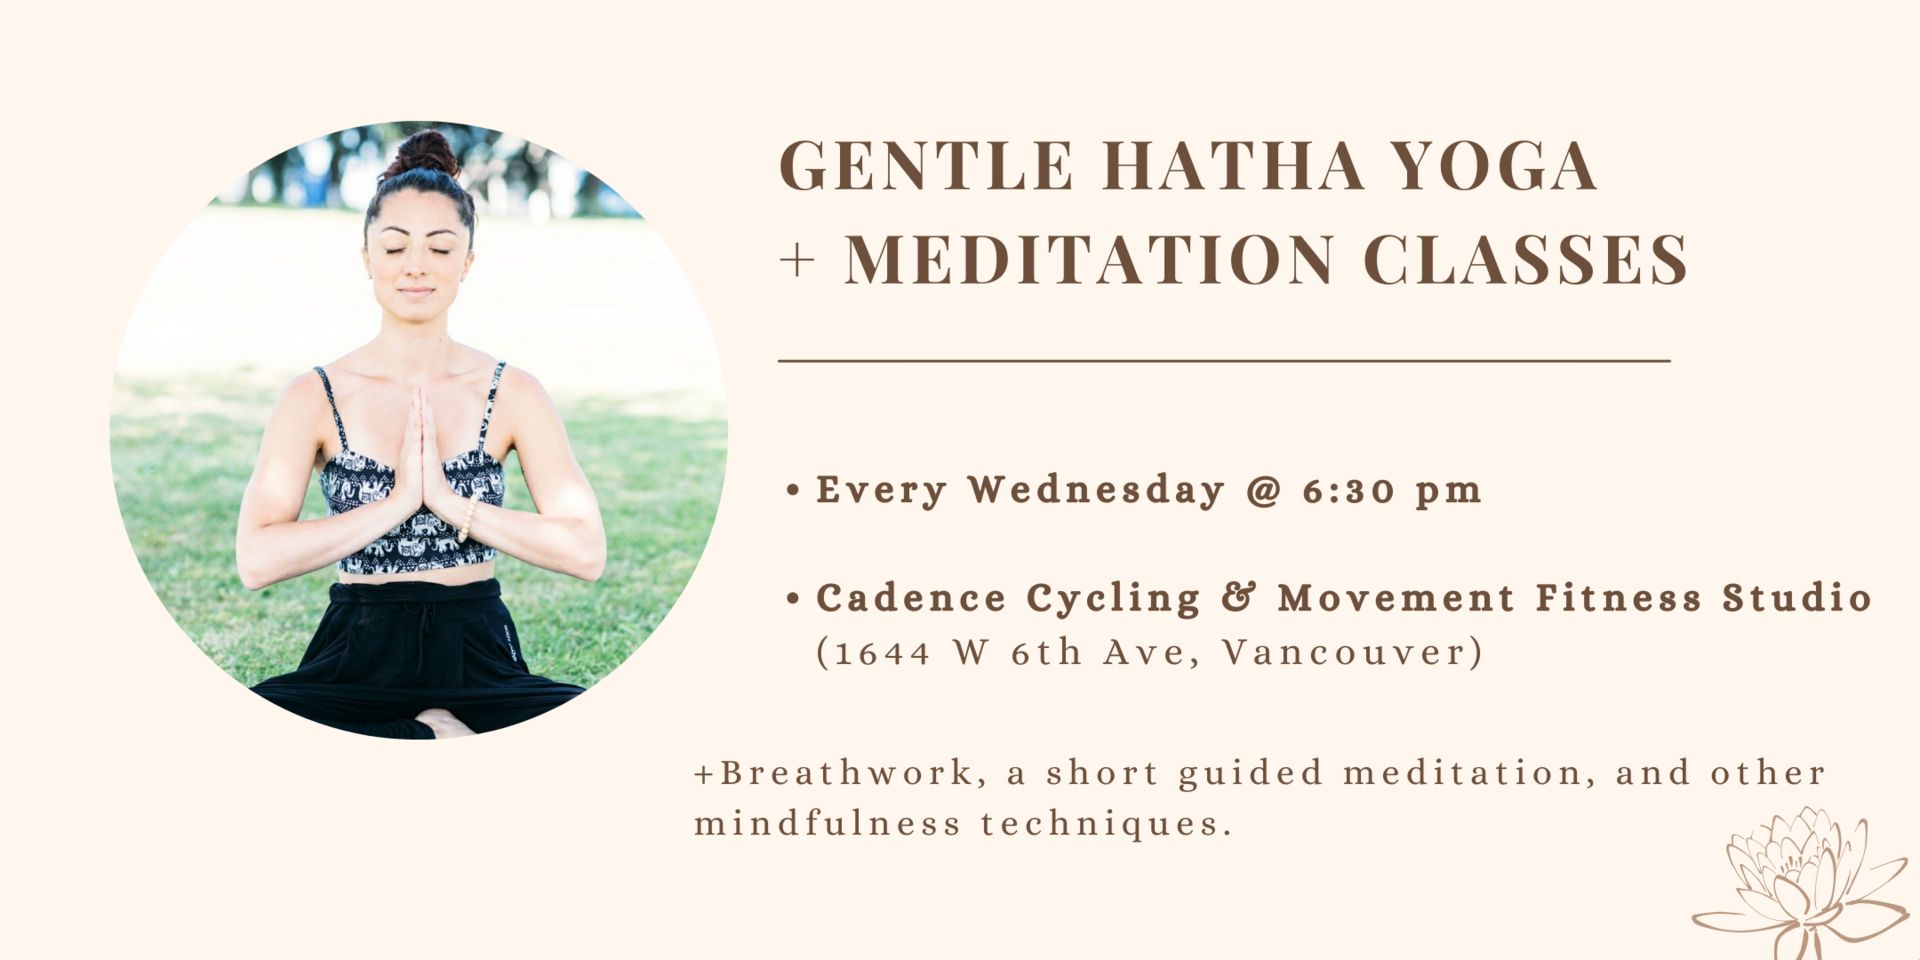 Gentle Hatha Yoga + Meditation Classes, Vancouver, British Columbia, Canada